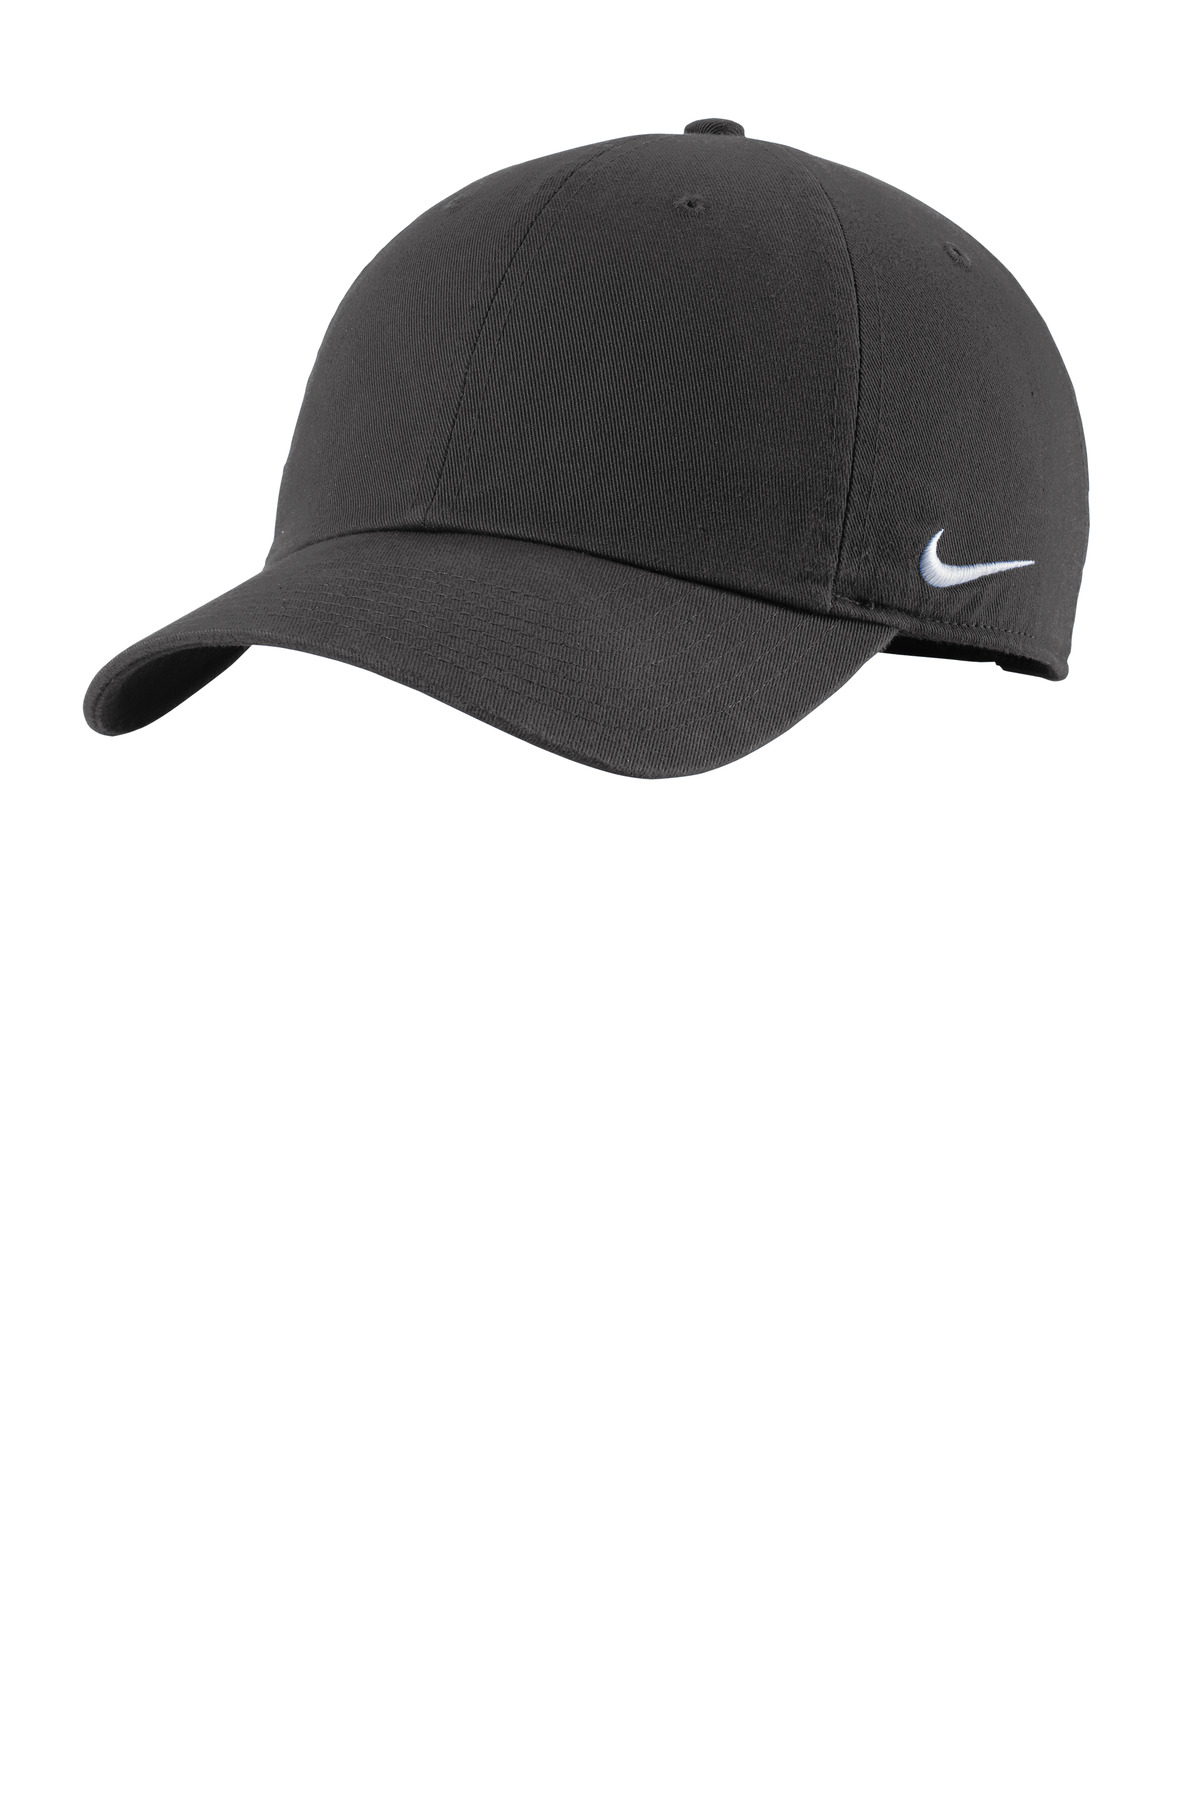 Nike Heritage Cotton Twill Cap-